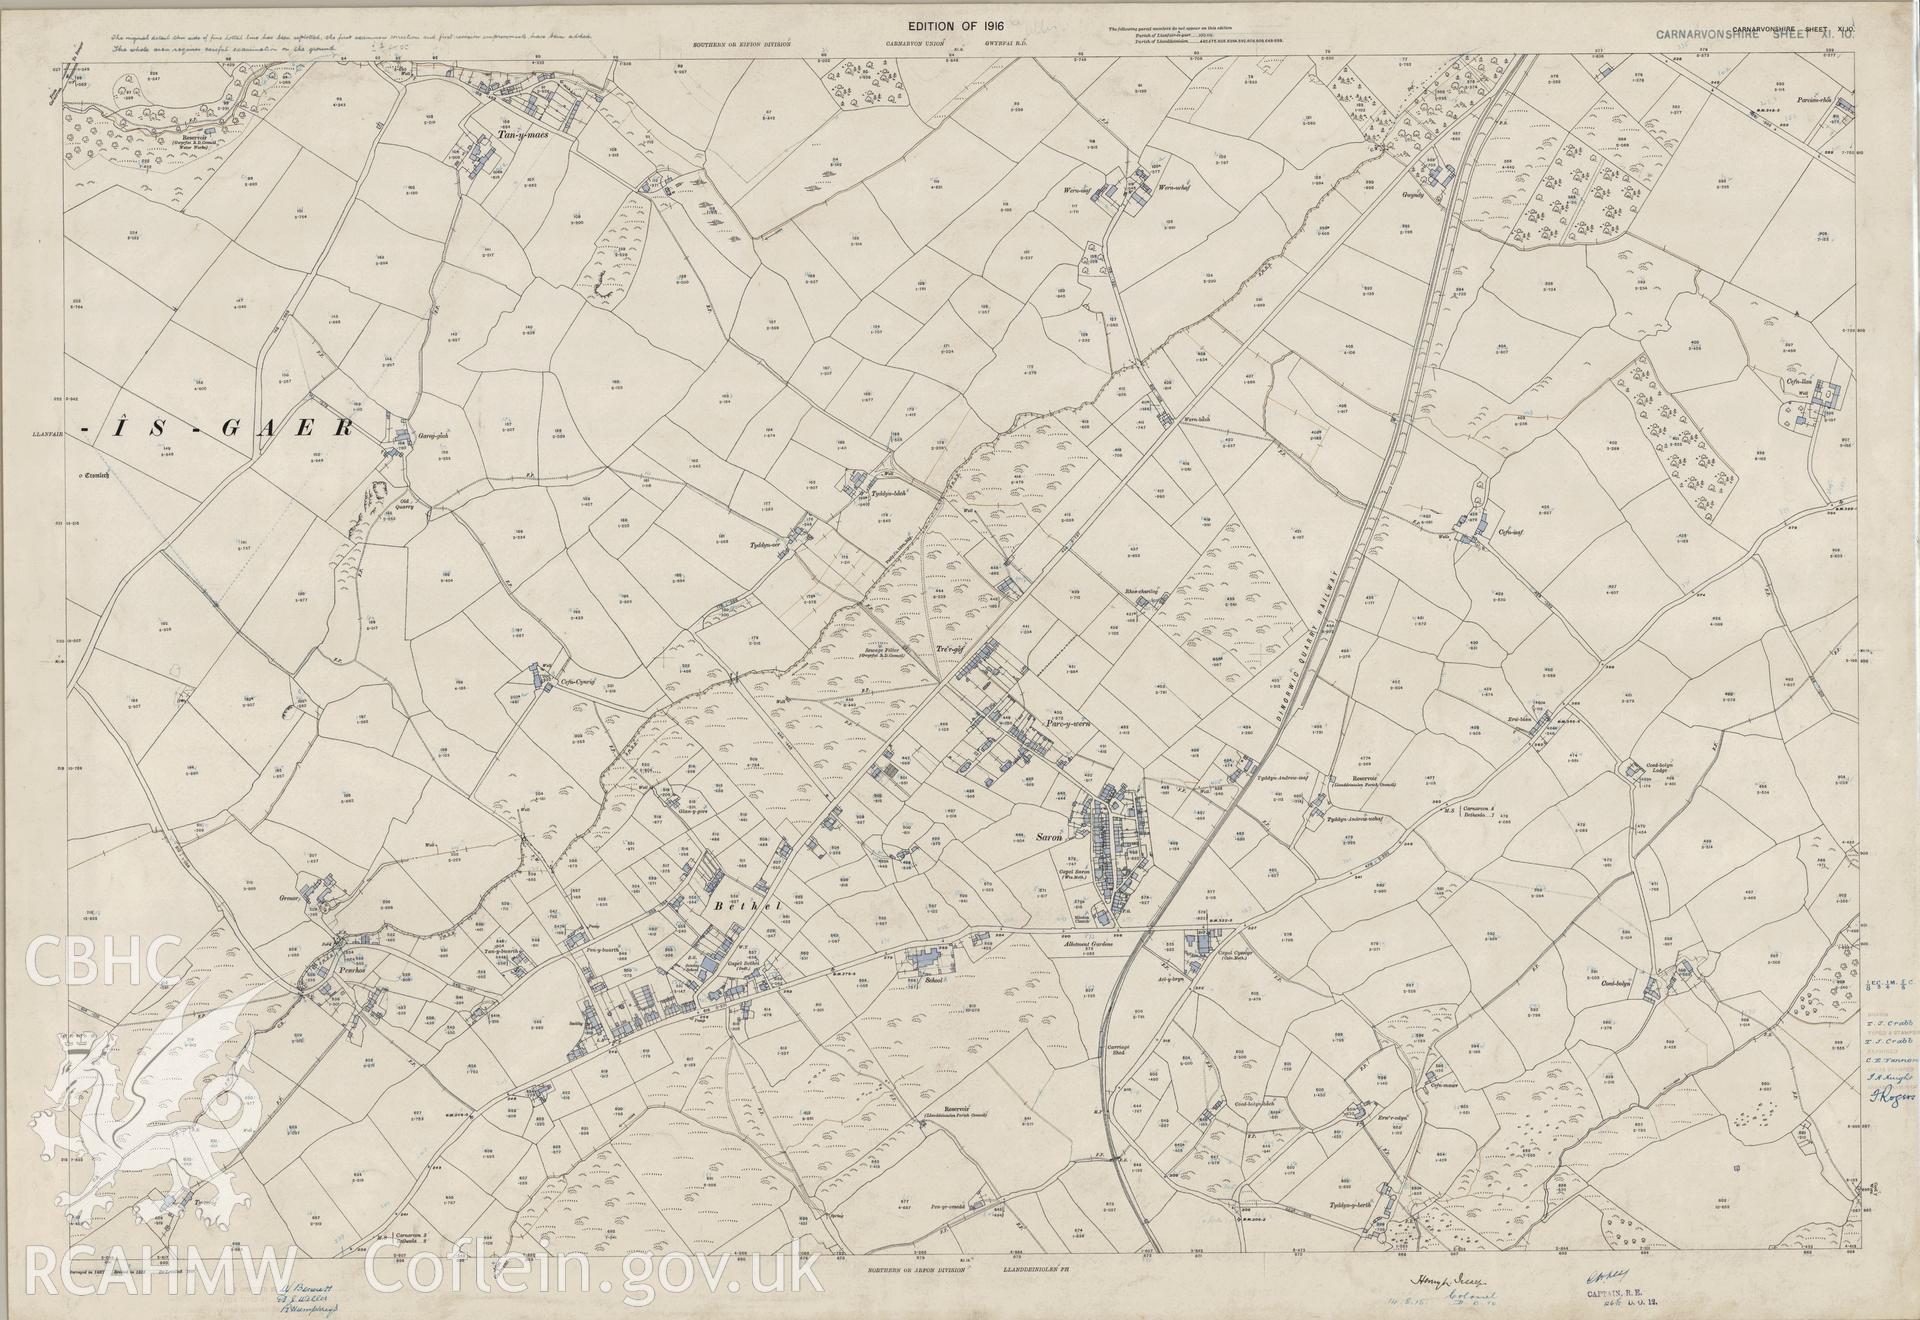 Digitized copy of Ordnance Survey 25 inch coloured map of Saron area of Caernarfonshire 1900.